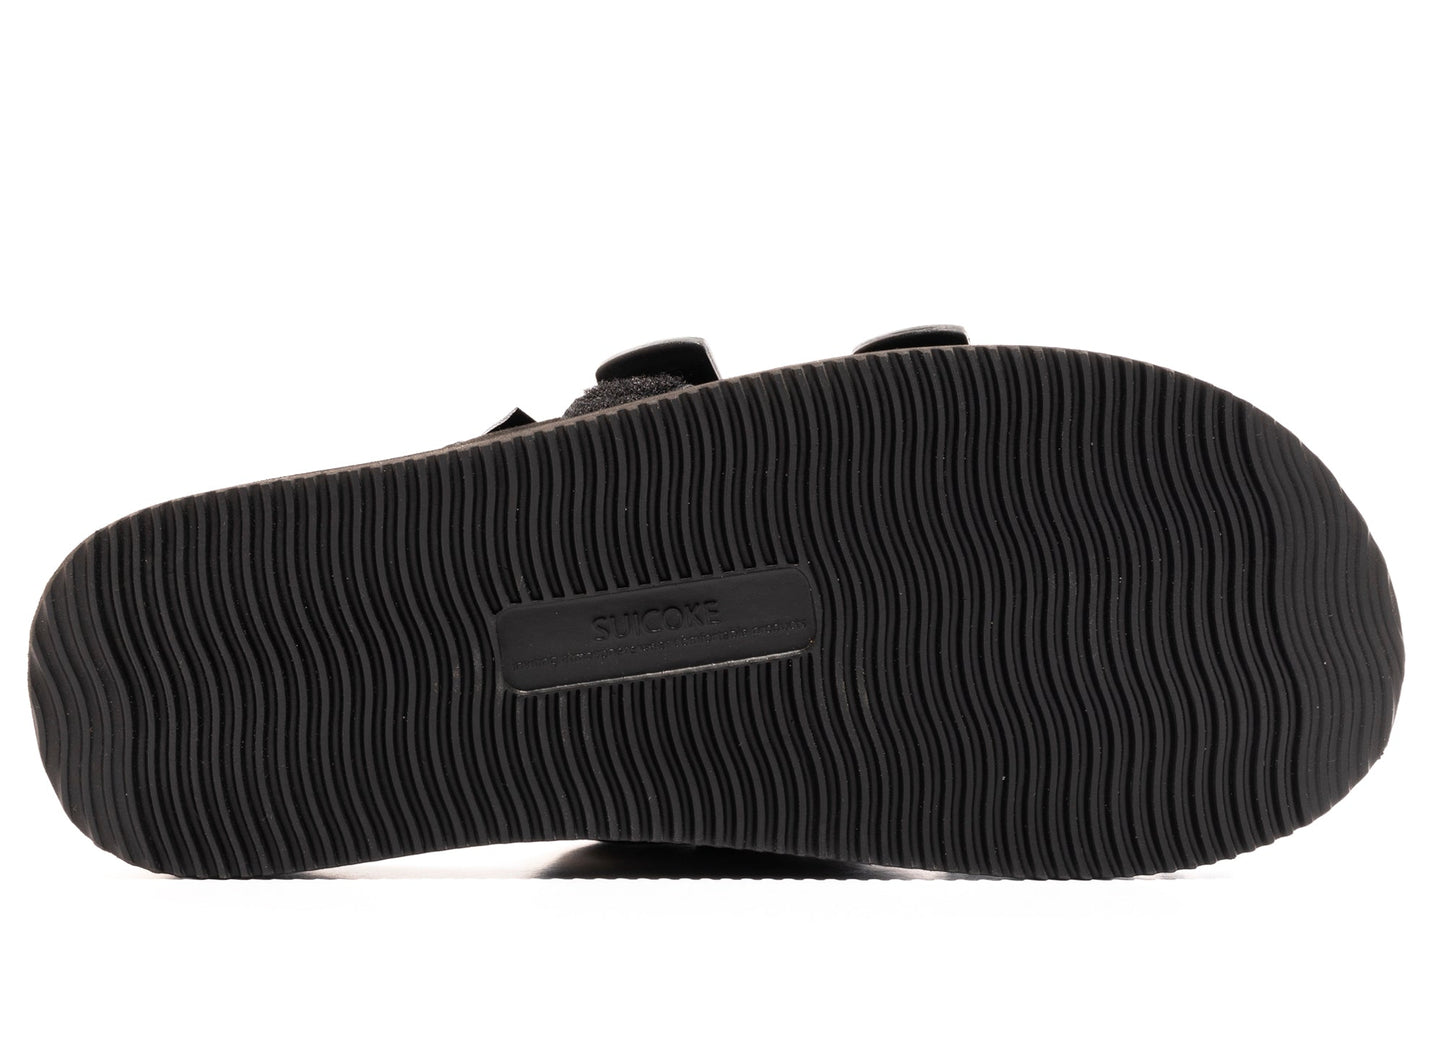 Suicoke HOTO-Cab Sandals in Black